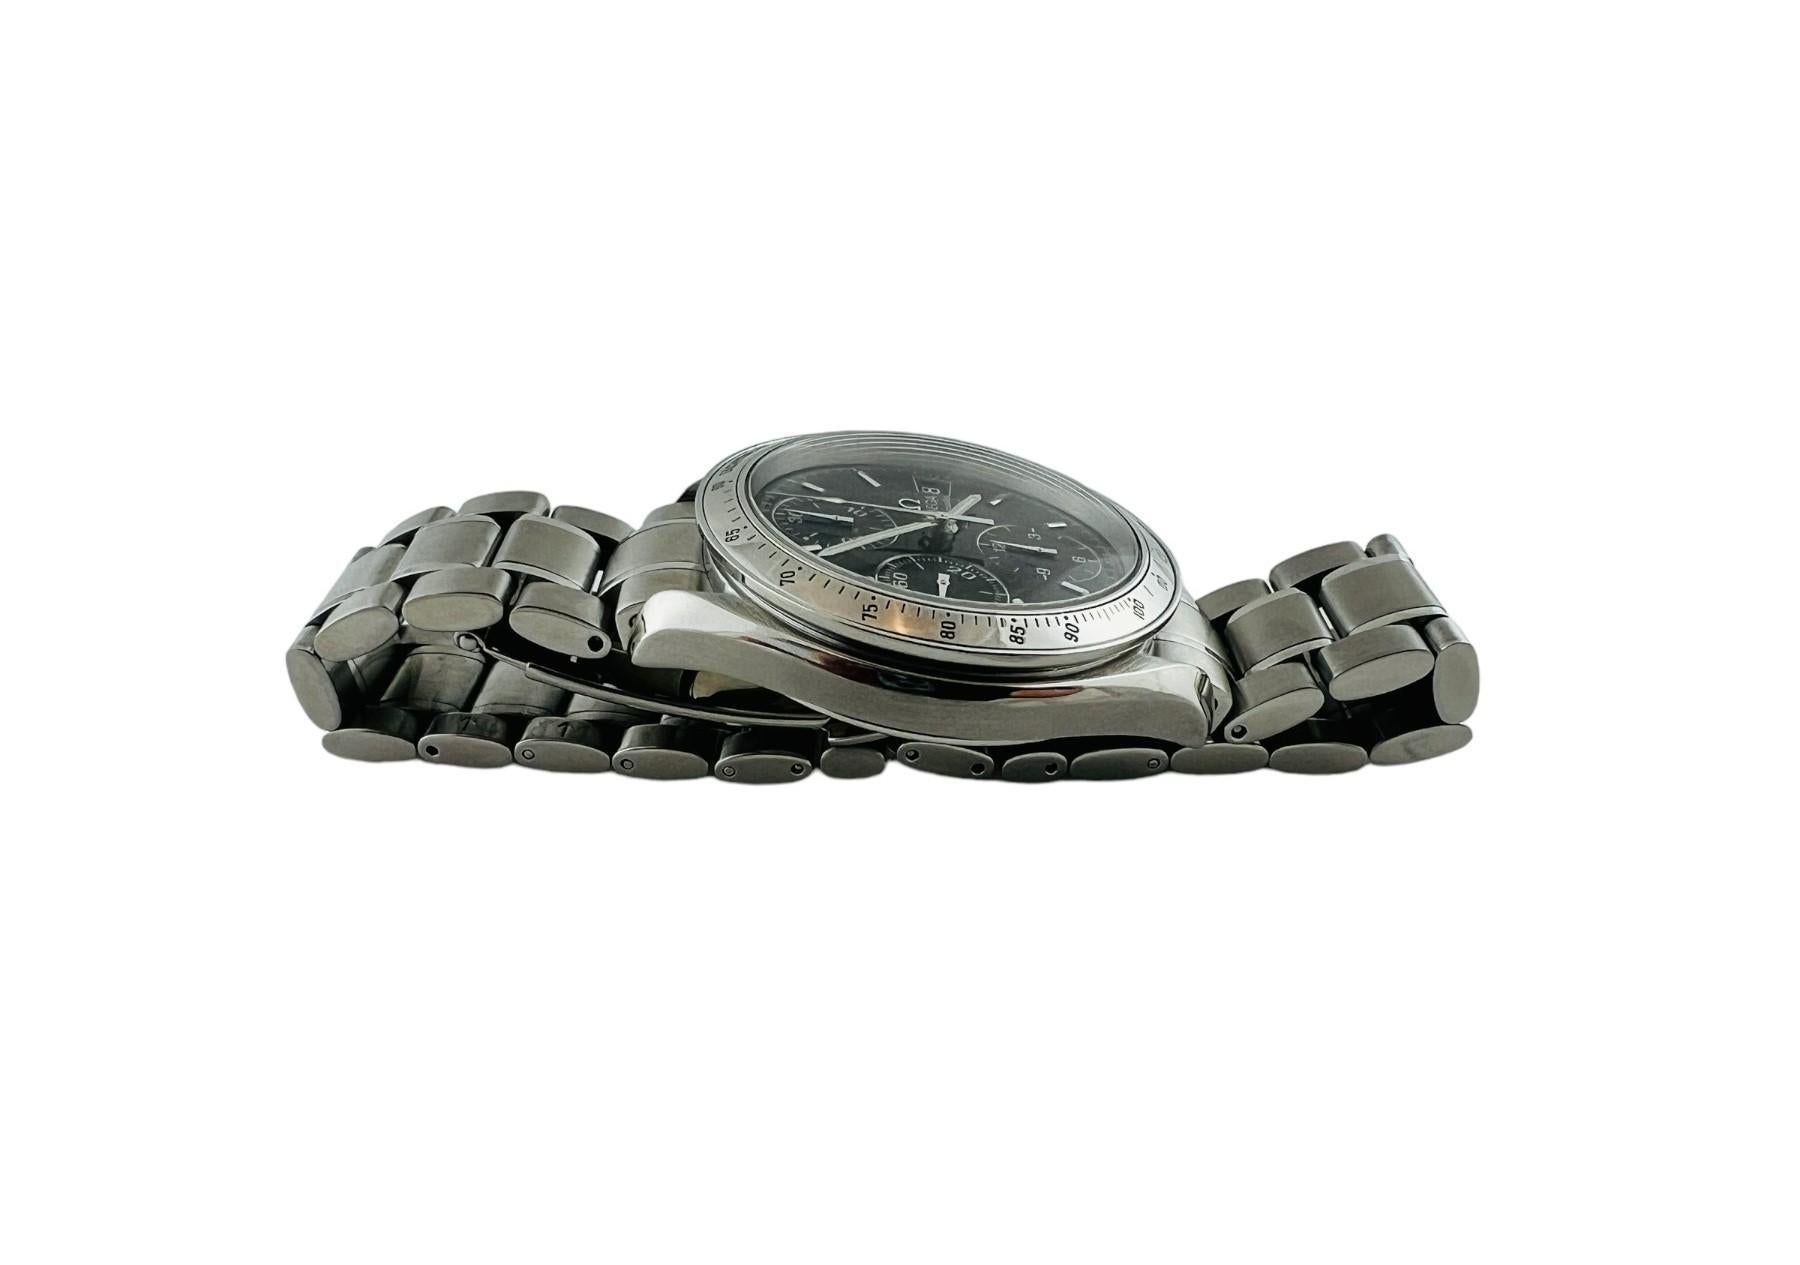 Omega Speedmaster Date Men's Watch 3513.50 Chronograph #16654 5